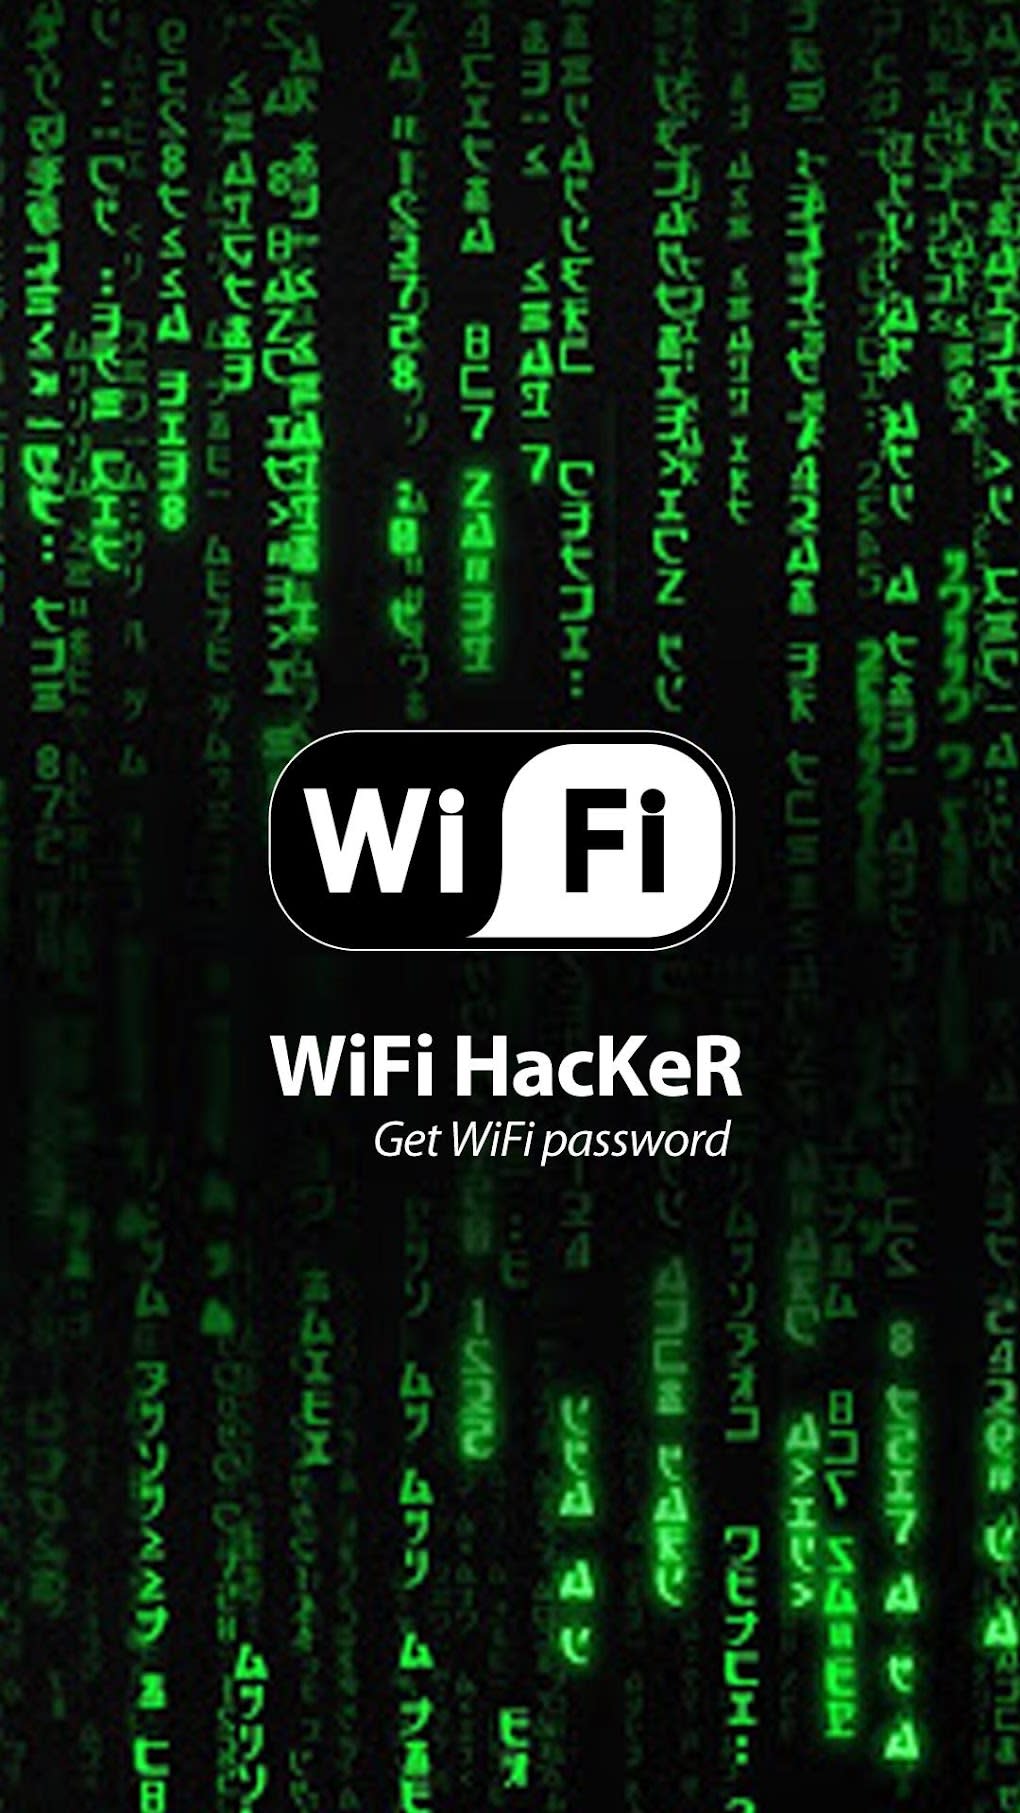 WiFi HaCker Simulator 2022 para Android - Download